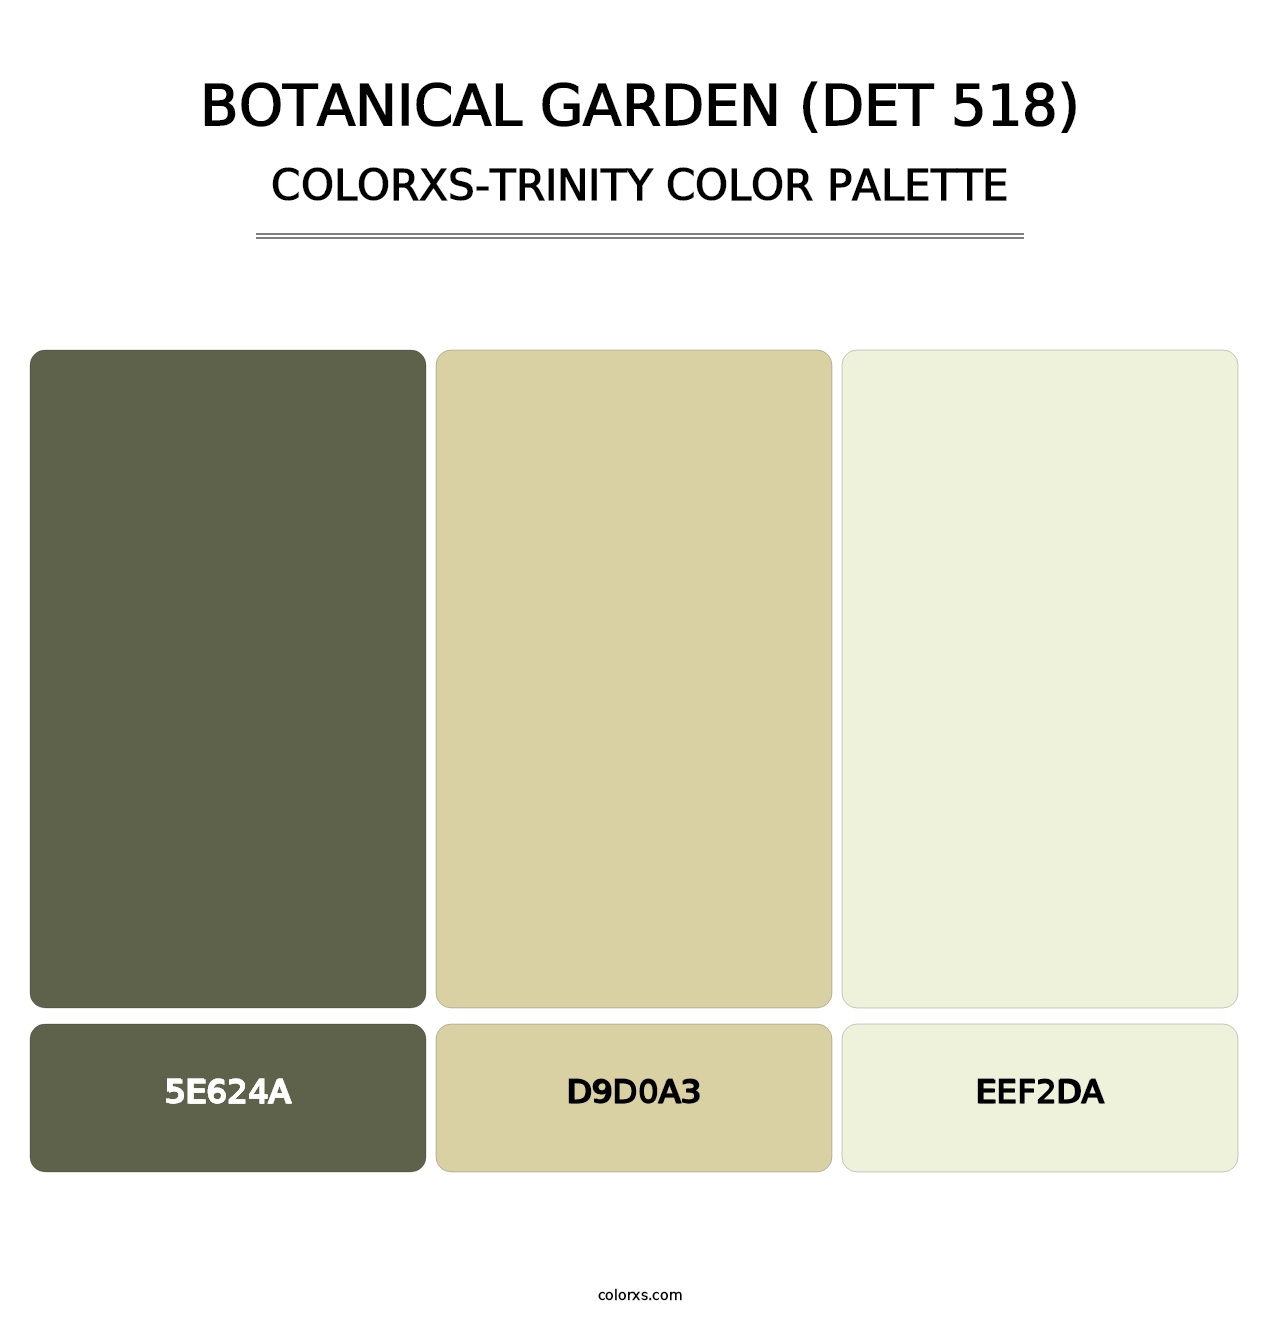 Botanical Garden (DET 518) - Colorxs Trinity Palette